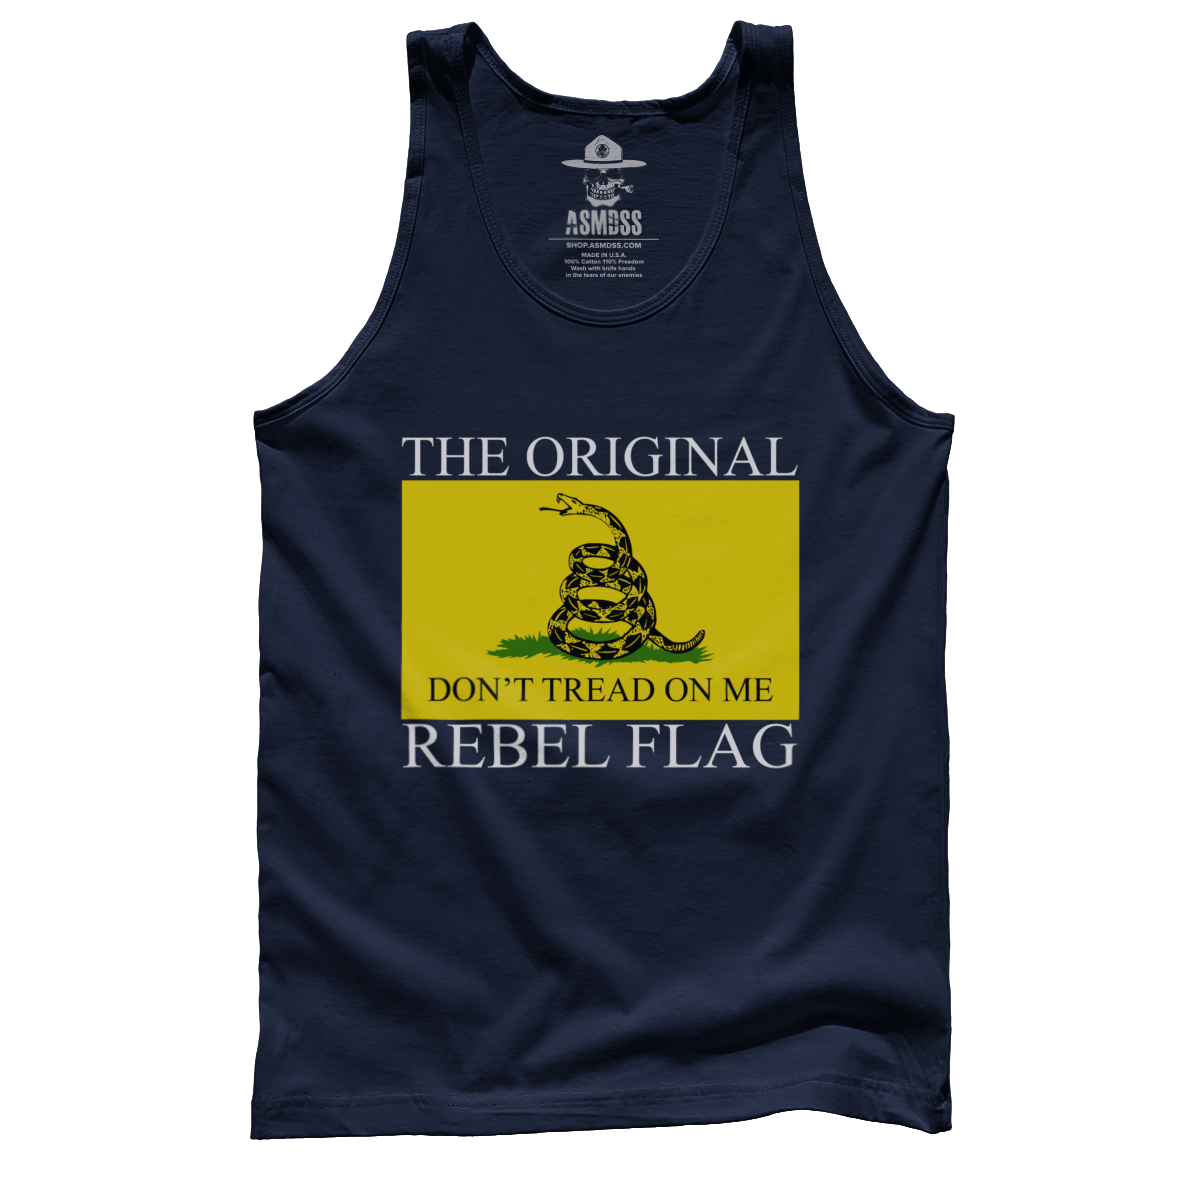 The Original Rebel Flag Asmdss Gear